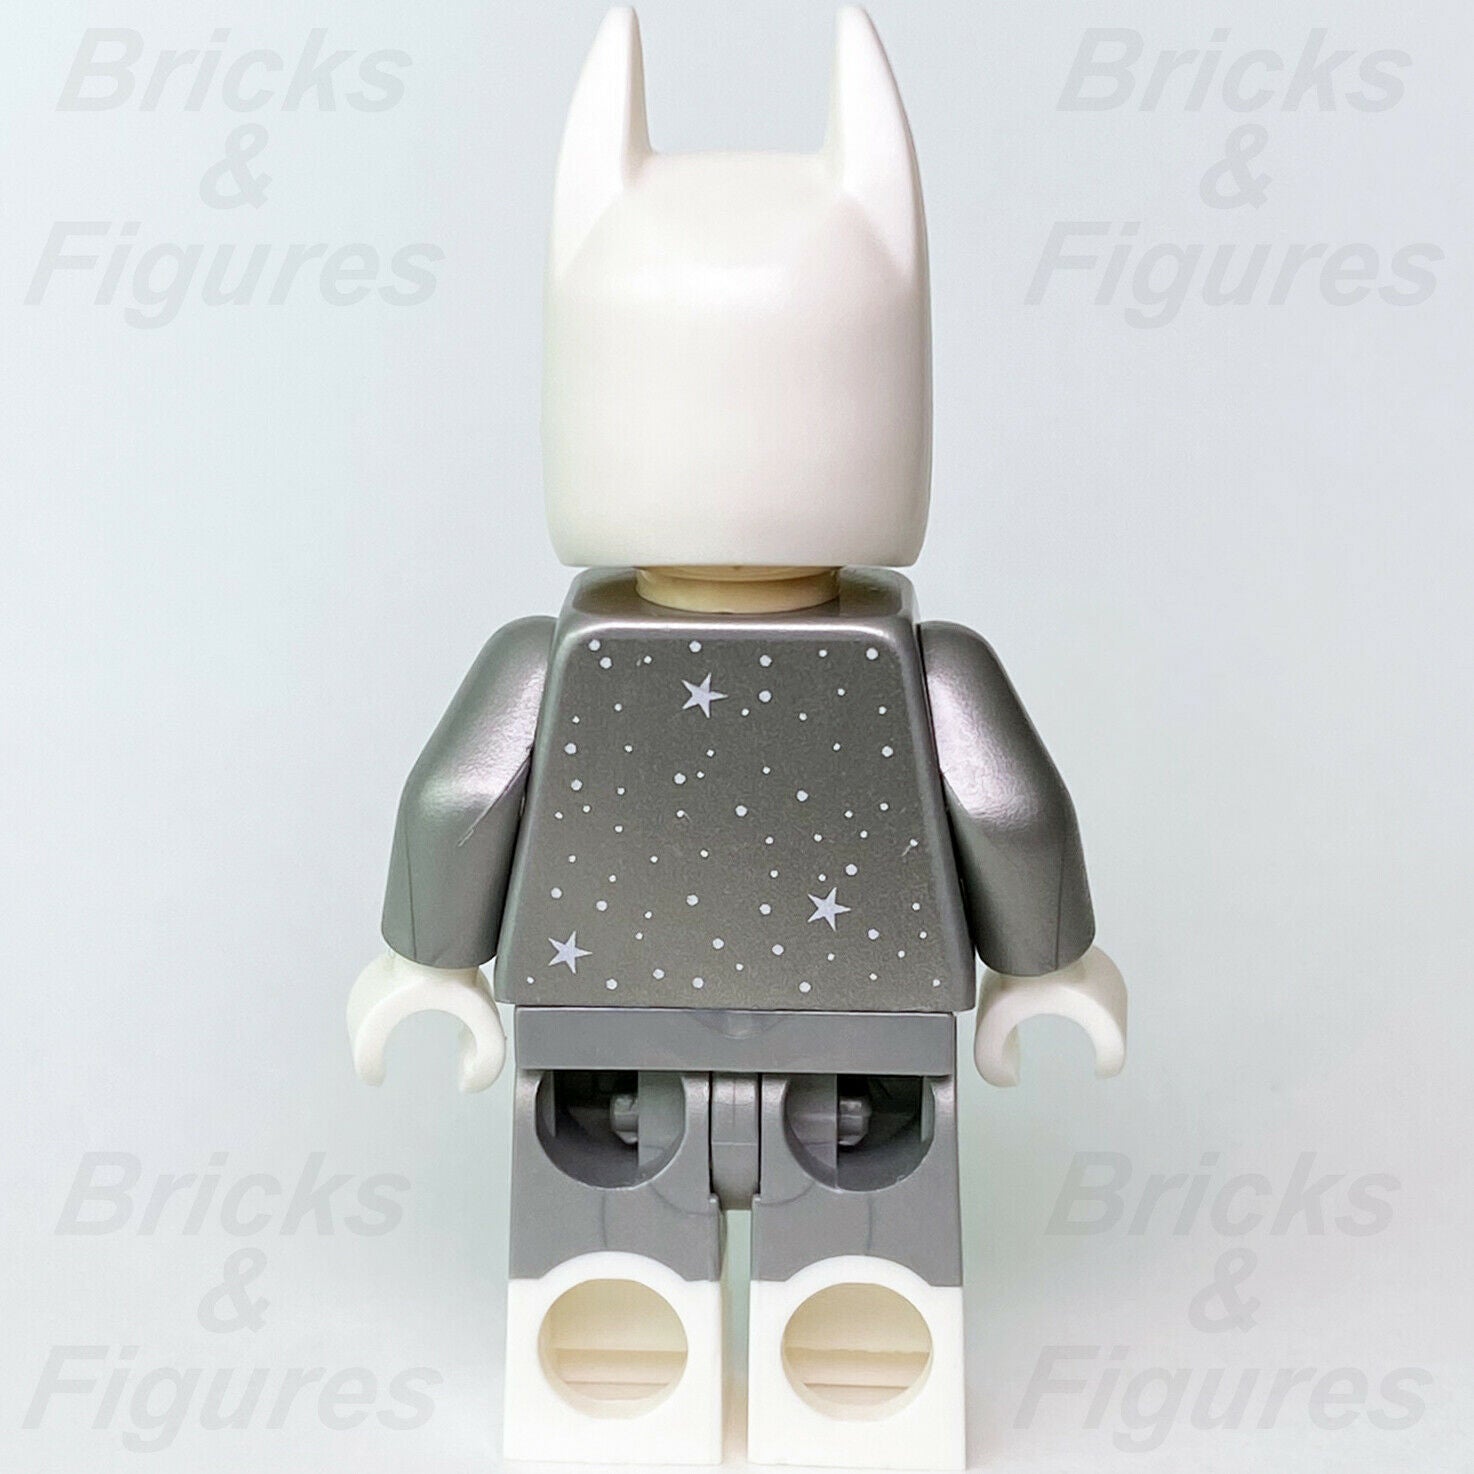 Bachelor Batman The LEGO Movie 2 DC Super Heroes Minifigure 70838 tlm192 New - Bricks & Figures